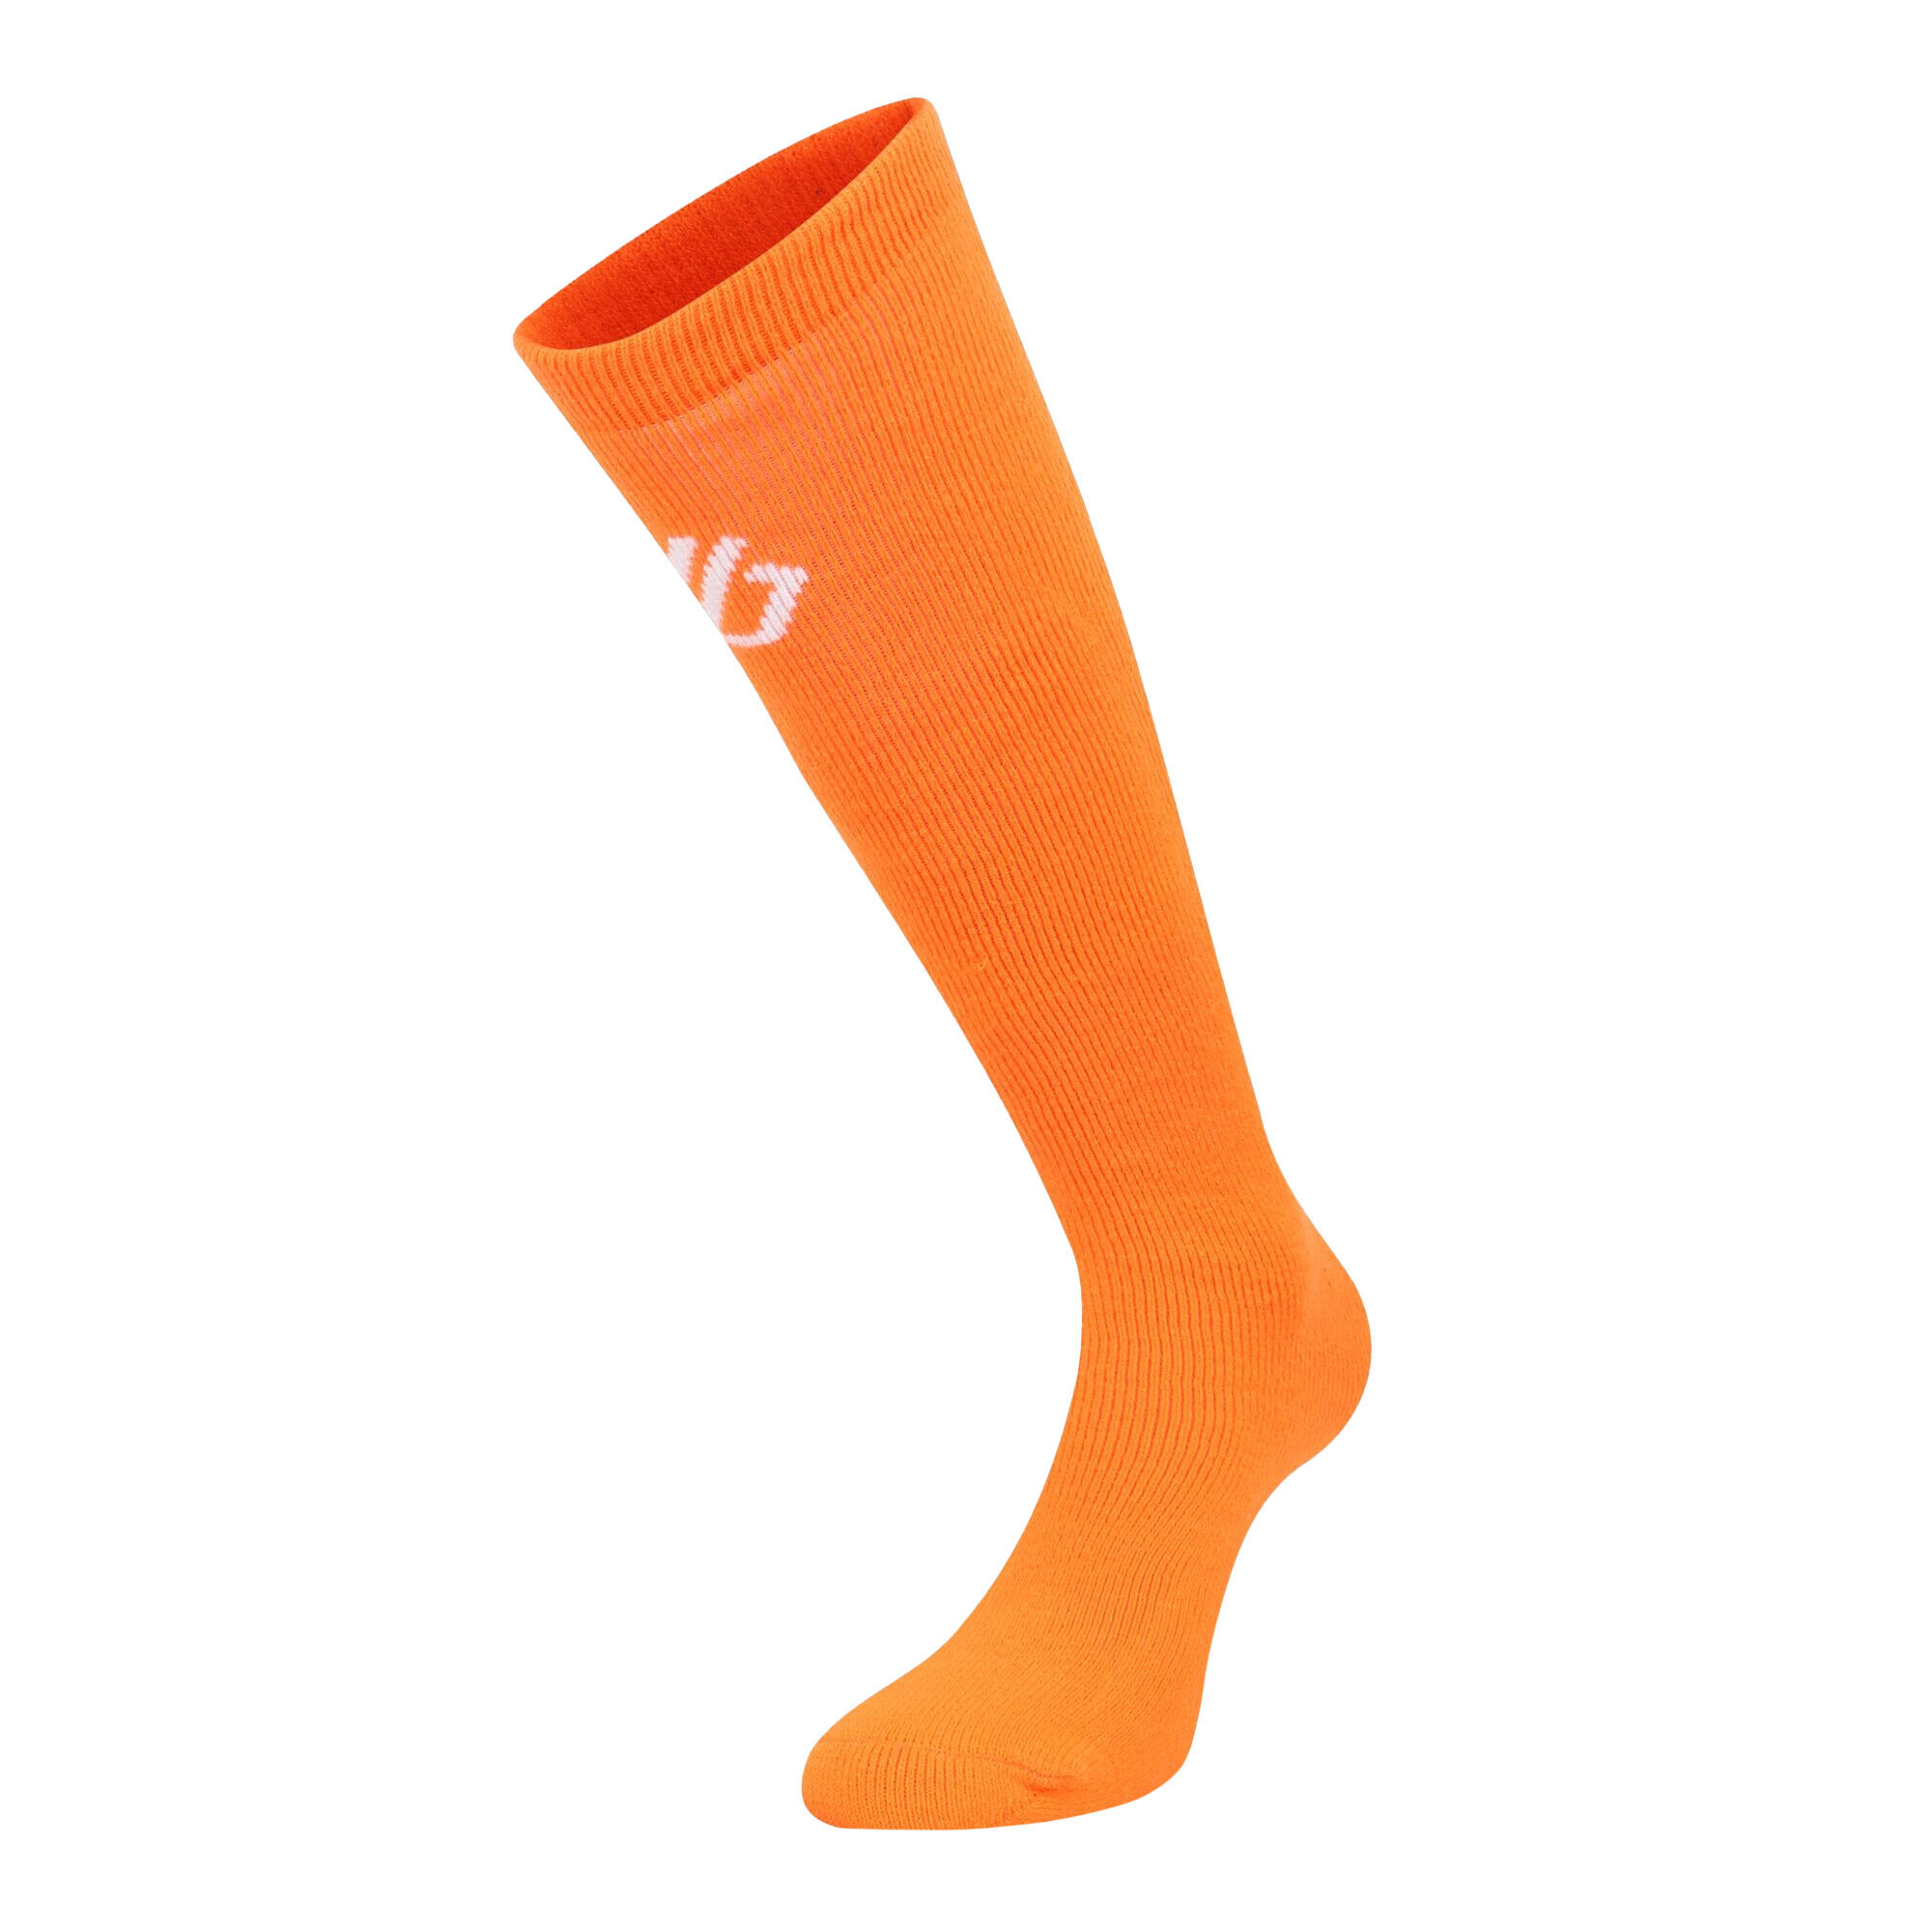 Unisex Adult Socks (Pack of 2) (Puffins Orange/Black) 2/4